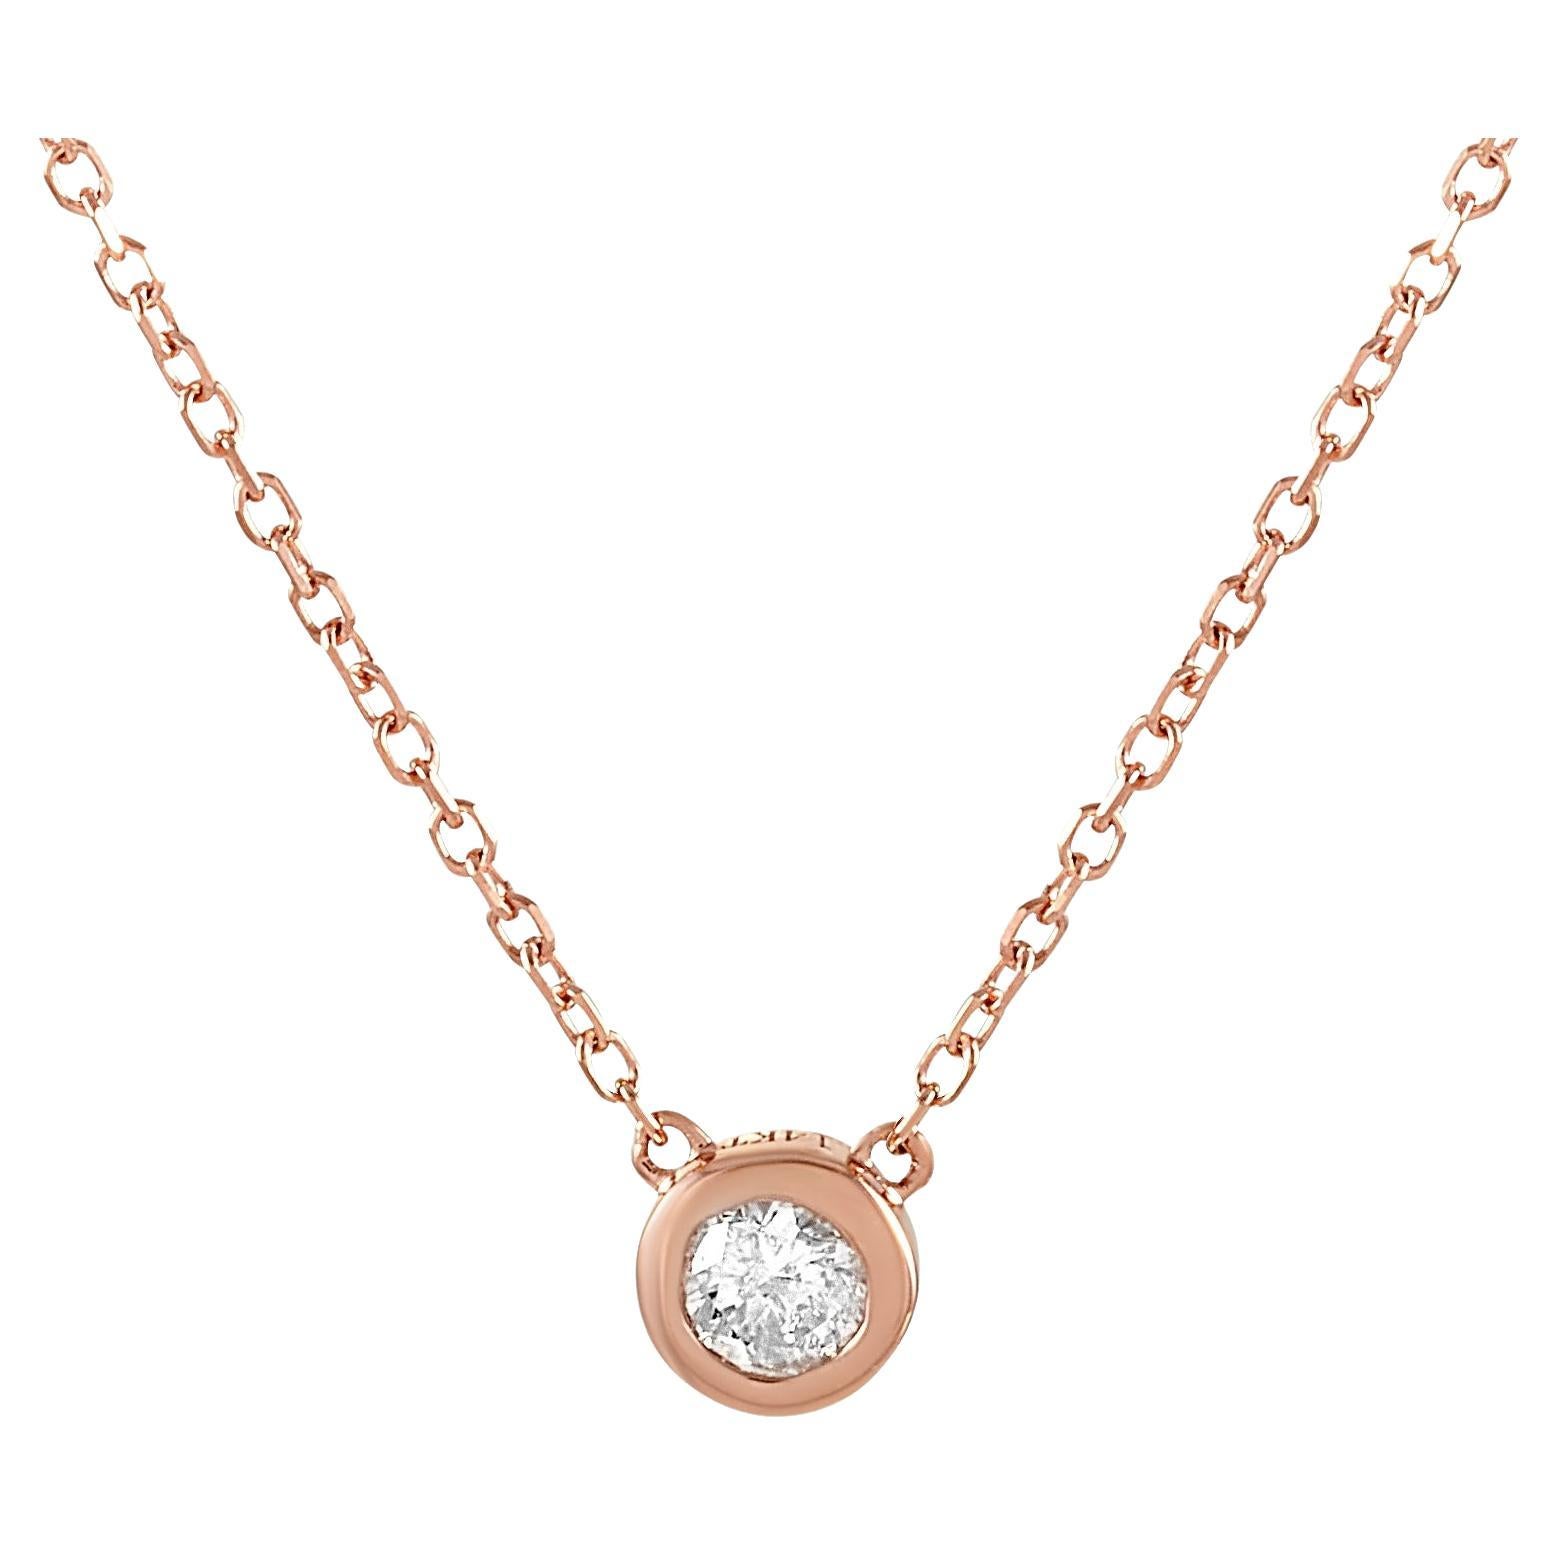 LB Exclusive 14K Rose Gold 0.10 Ct Diamond Pendant Necklace